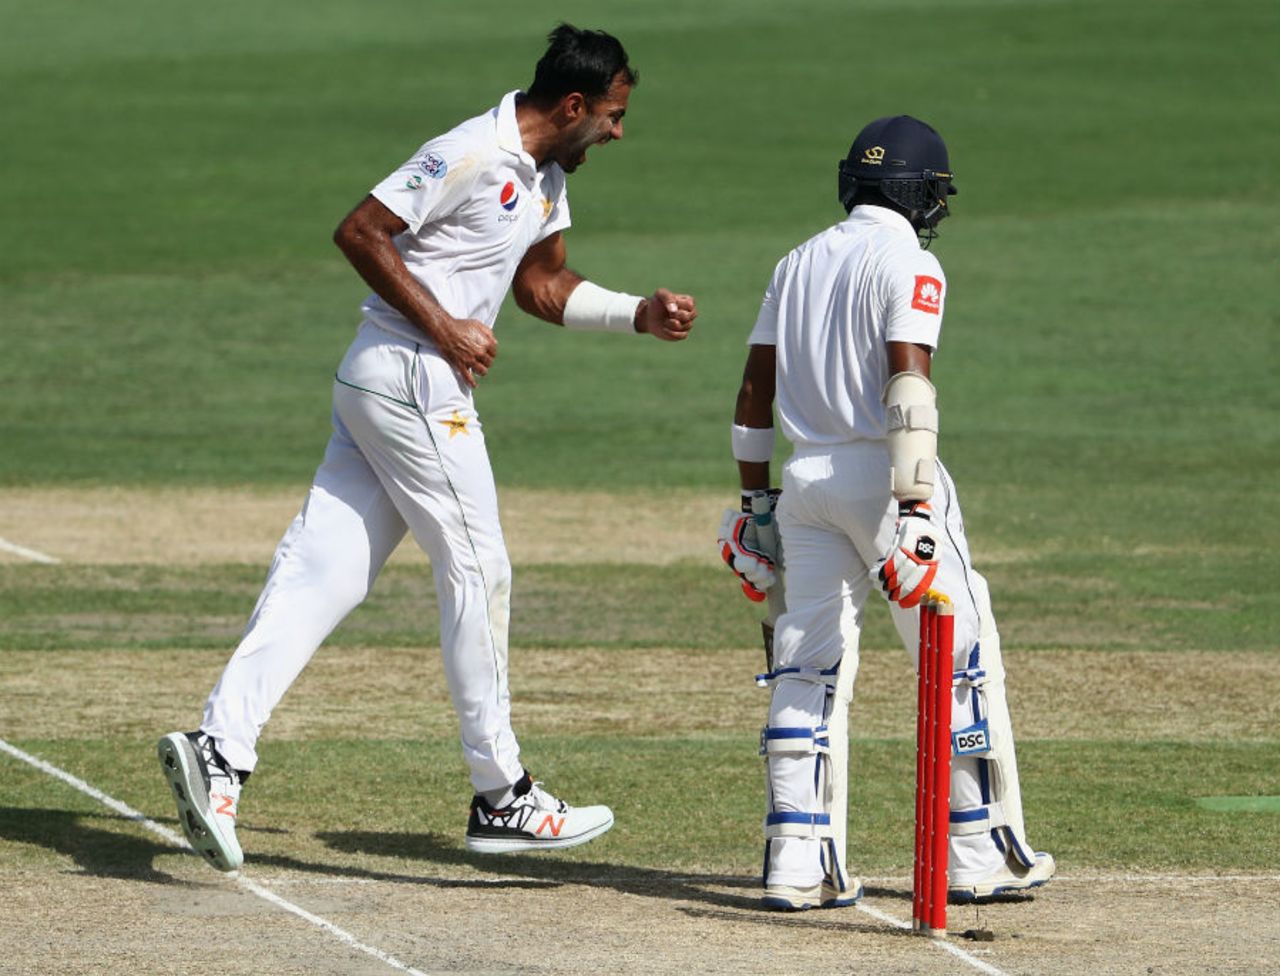 Wahab Riaz is pumped as he dismisses Niroshan Dickwella, Pakistan v Sri Lanka, 2nd Test, Dubai, 4th day, October 9, 2017